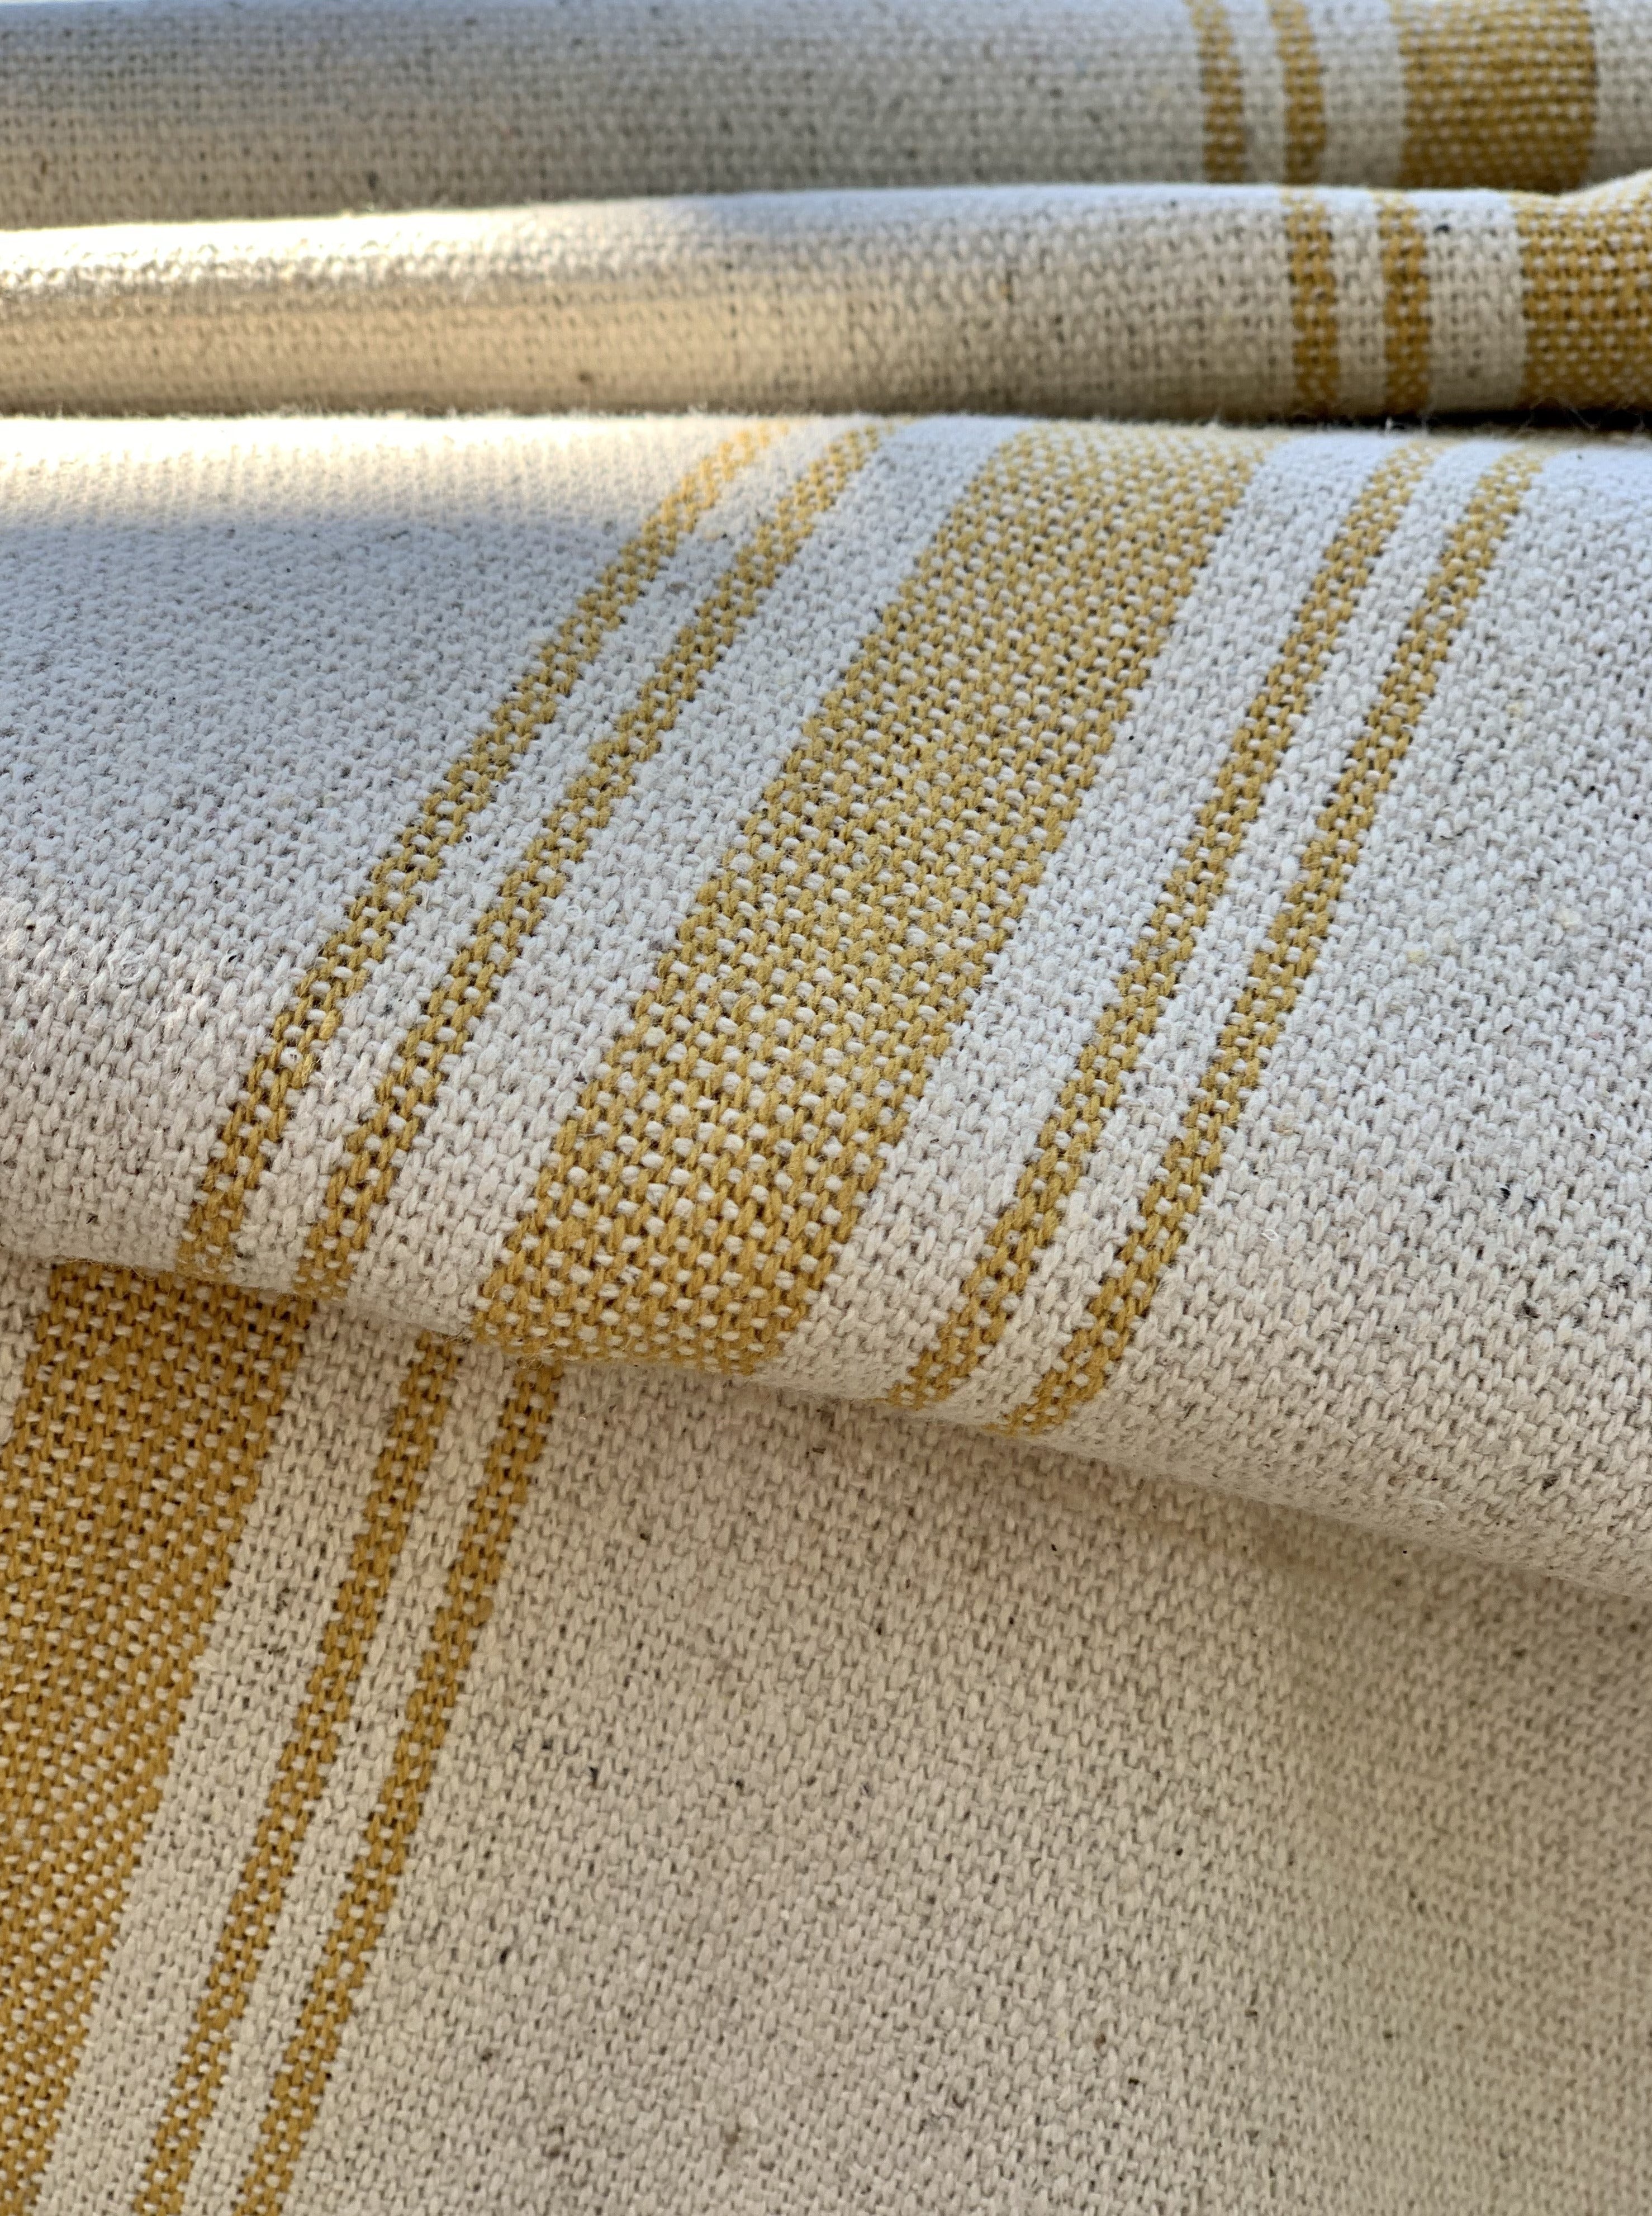 Grain Sack Fabric - Yellow Stripes on Cream